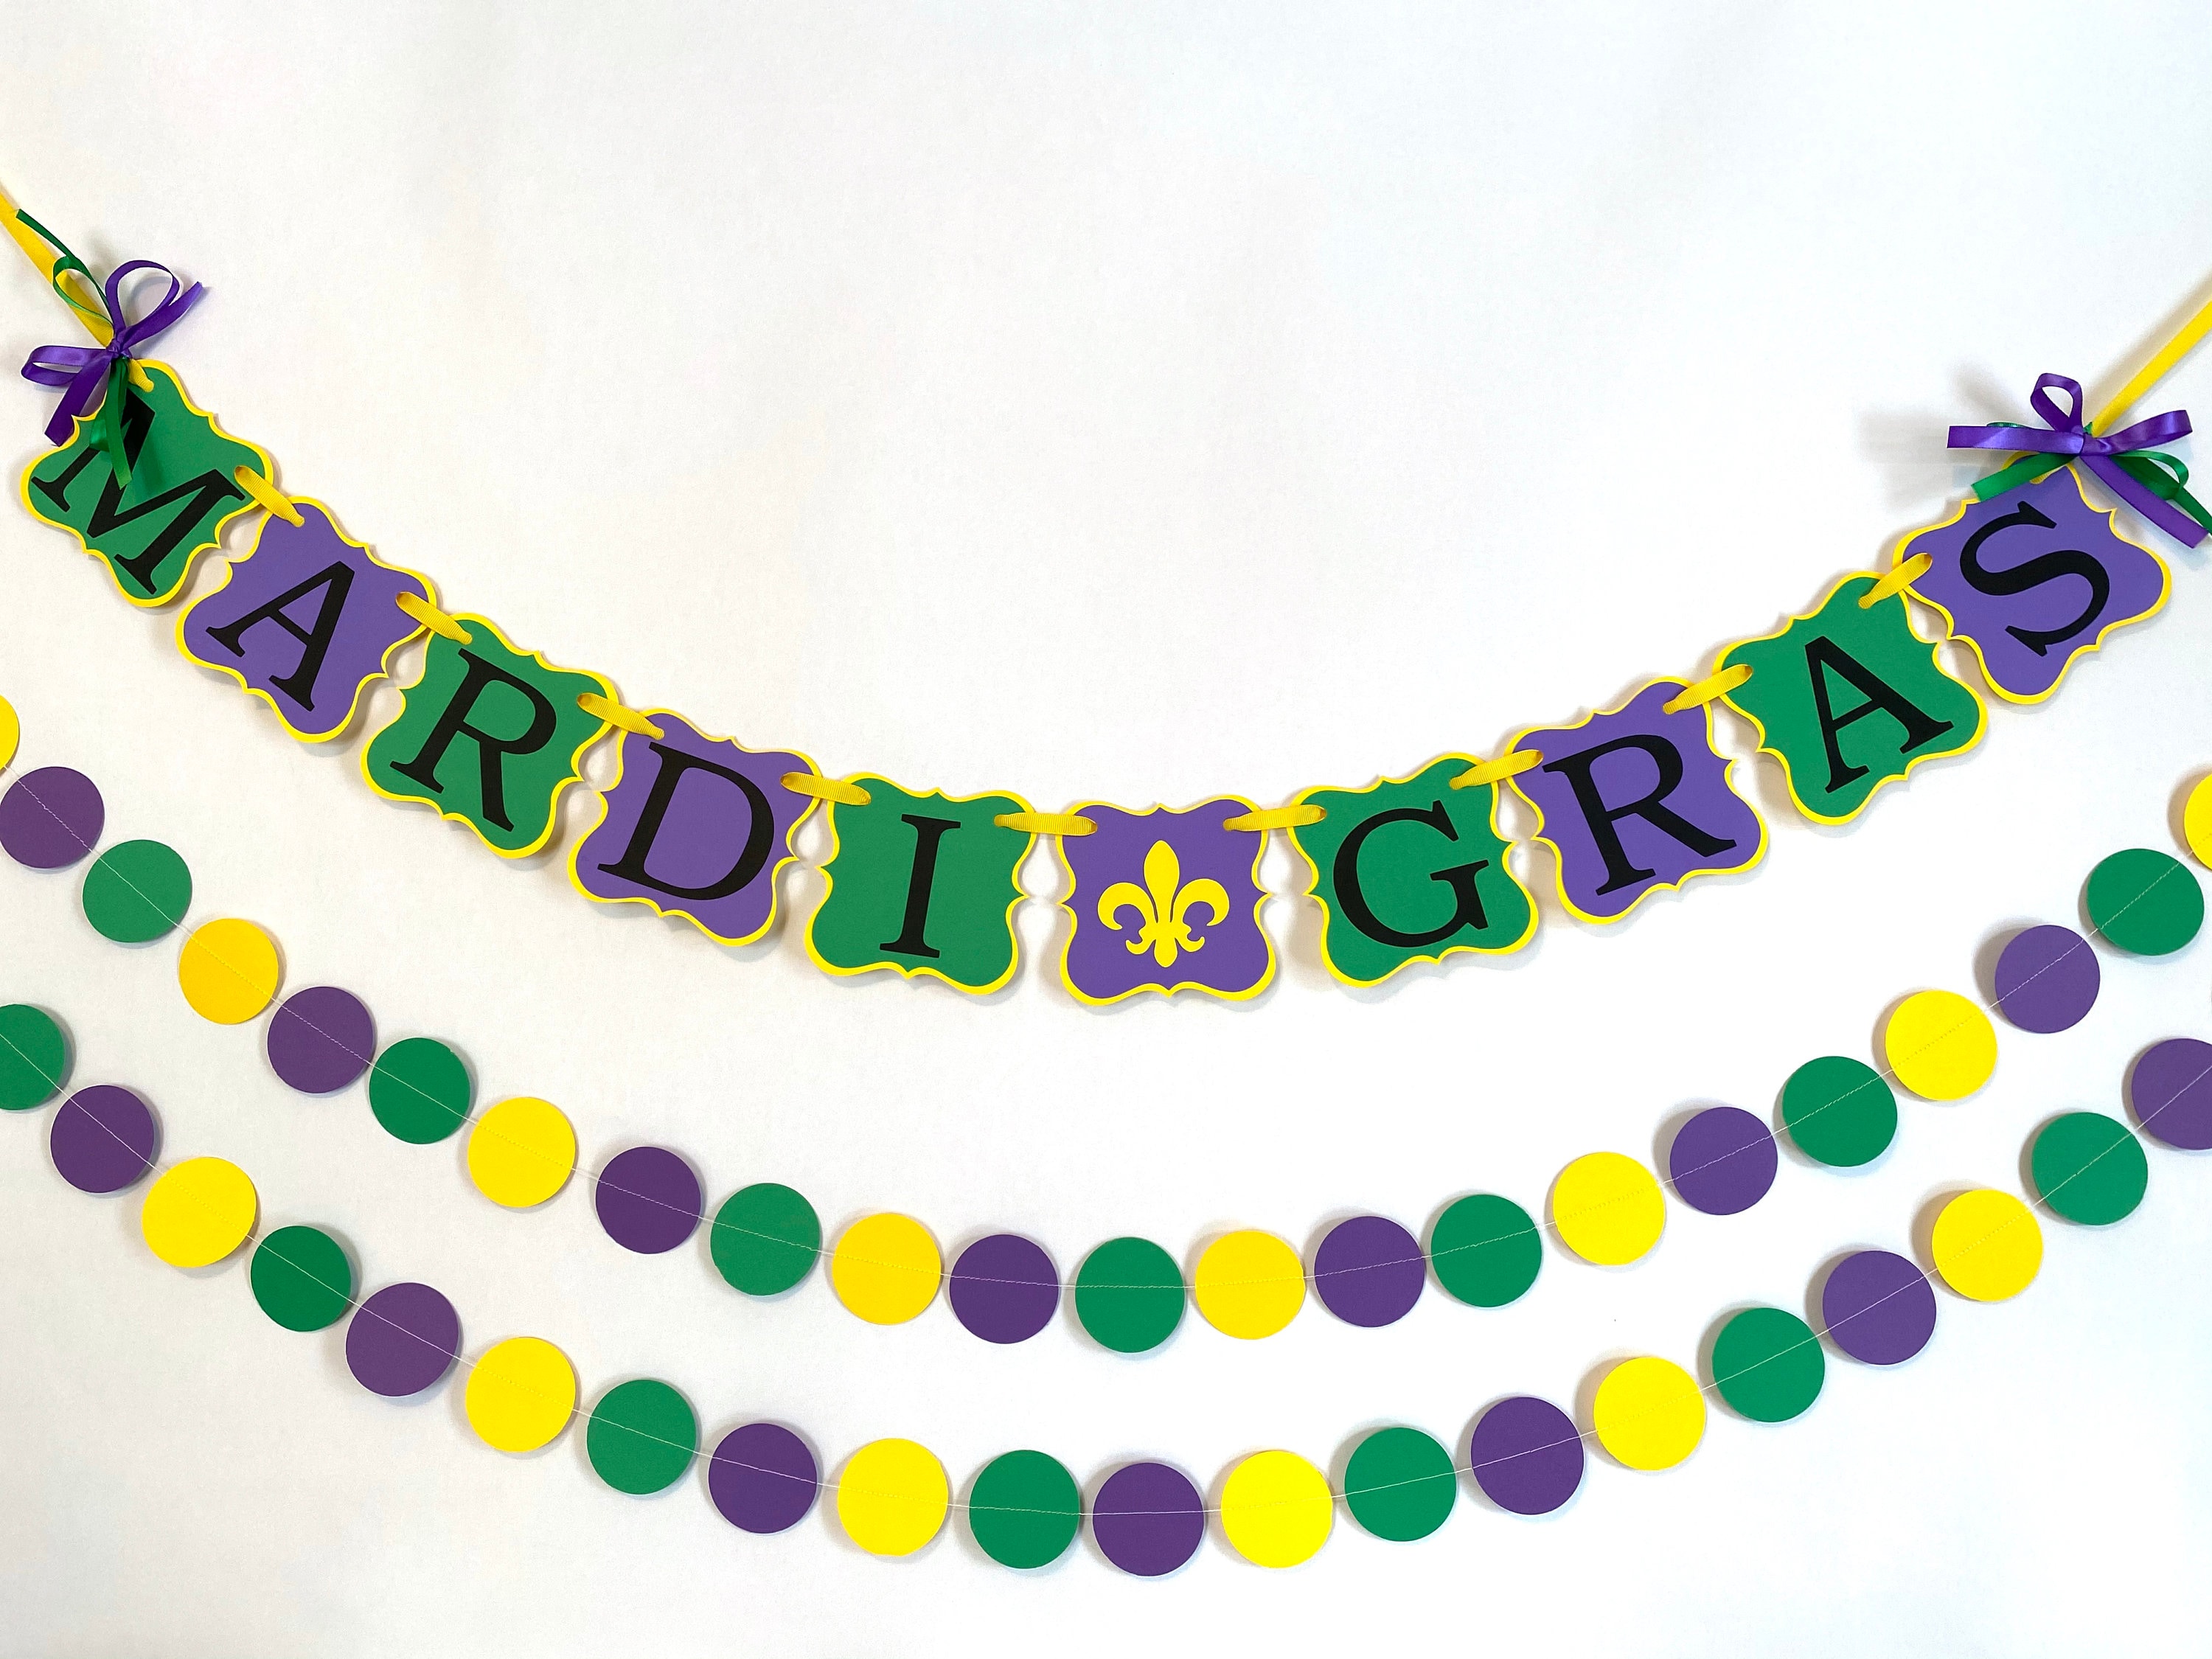 Mardi Gras Fringe Garland Backdrop, Mardi Gras, Party Decor, 6 Pieces